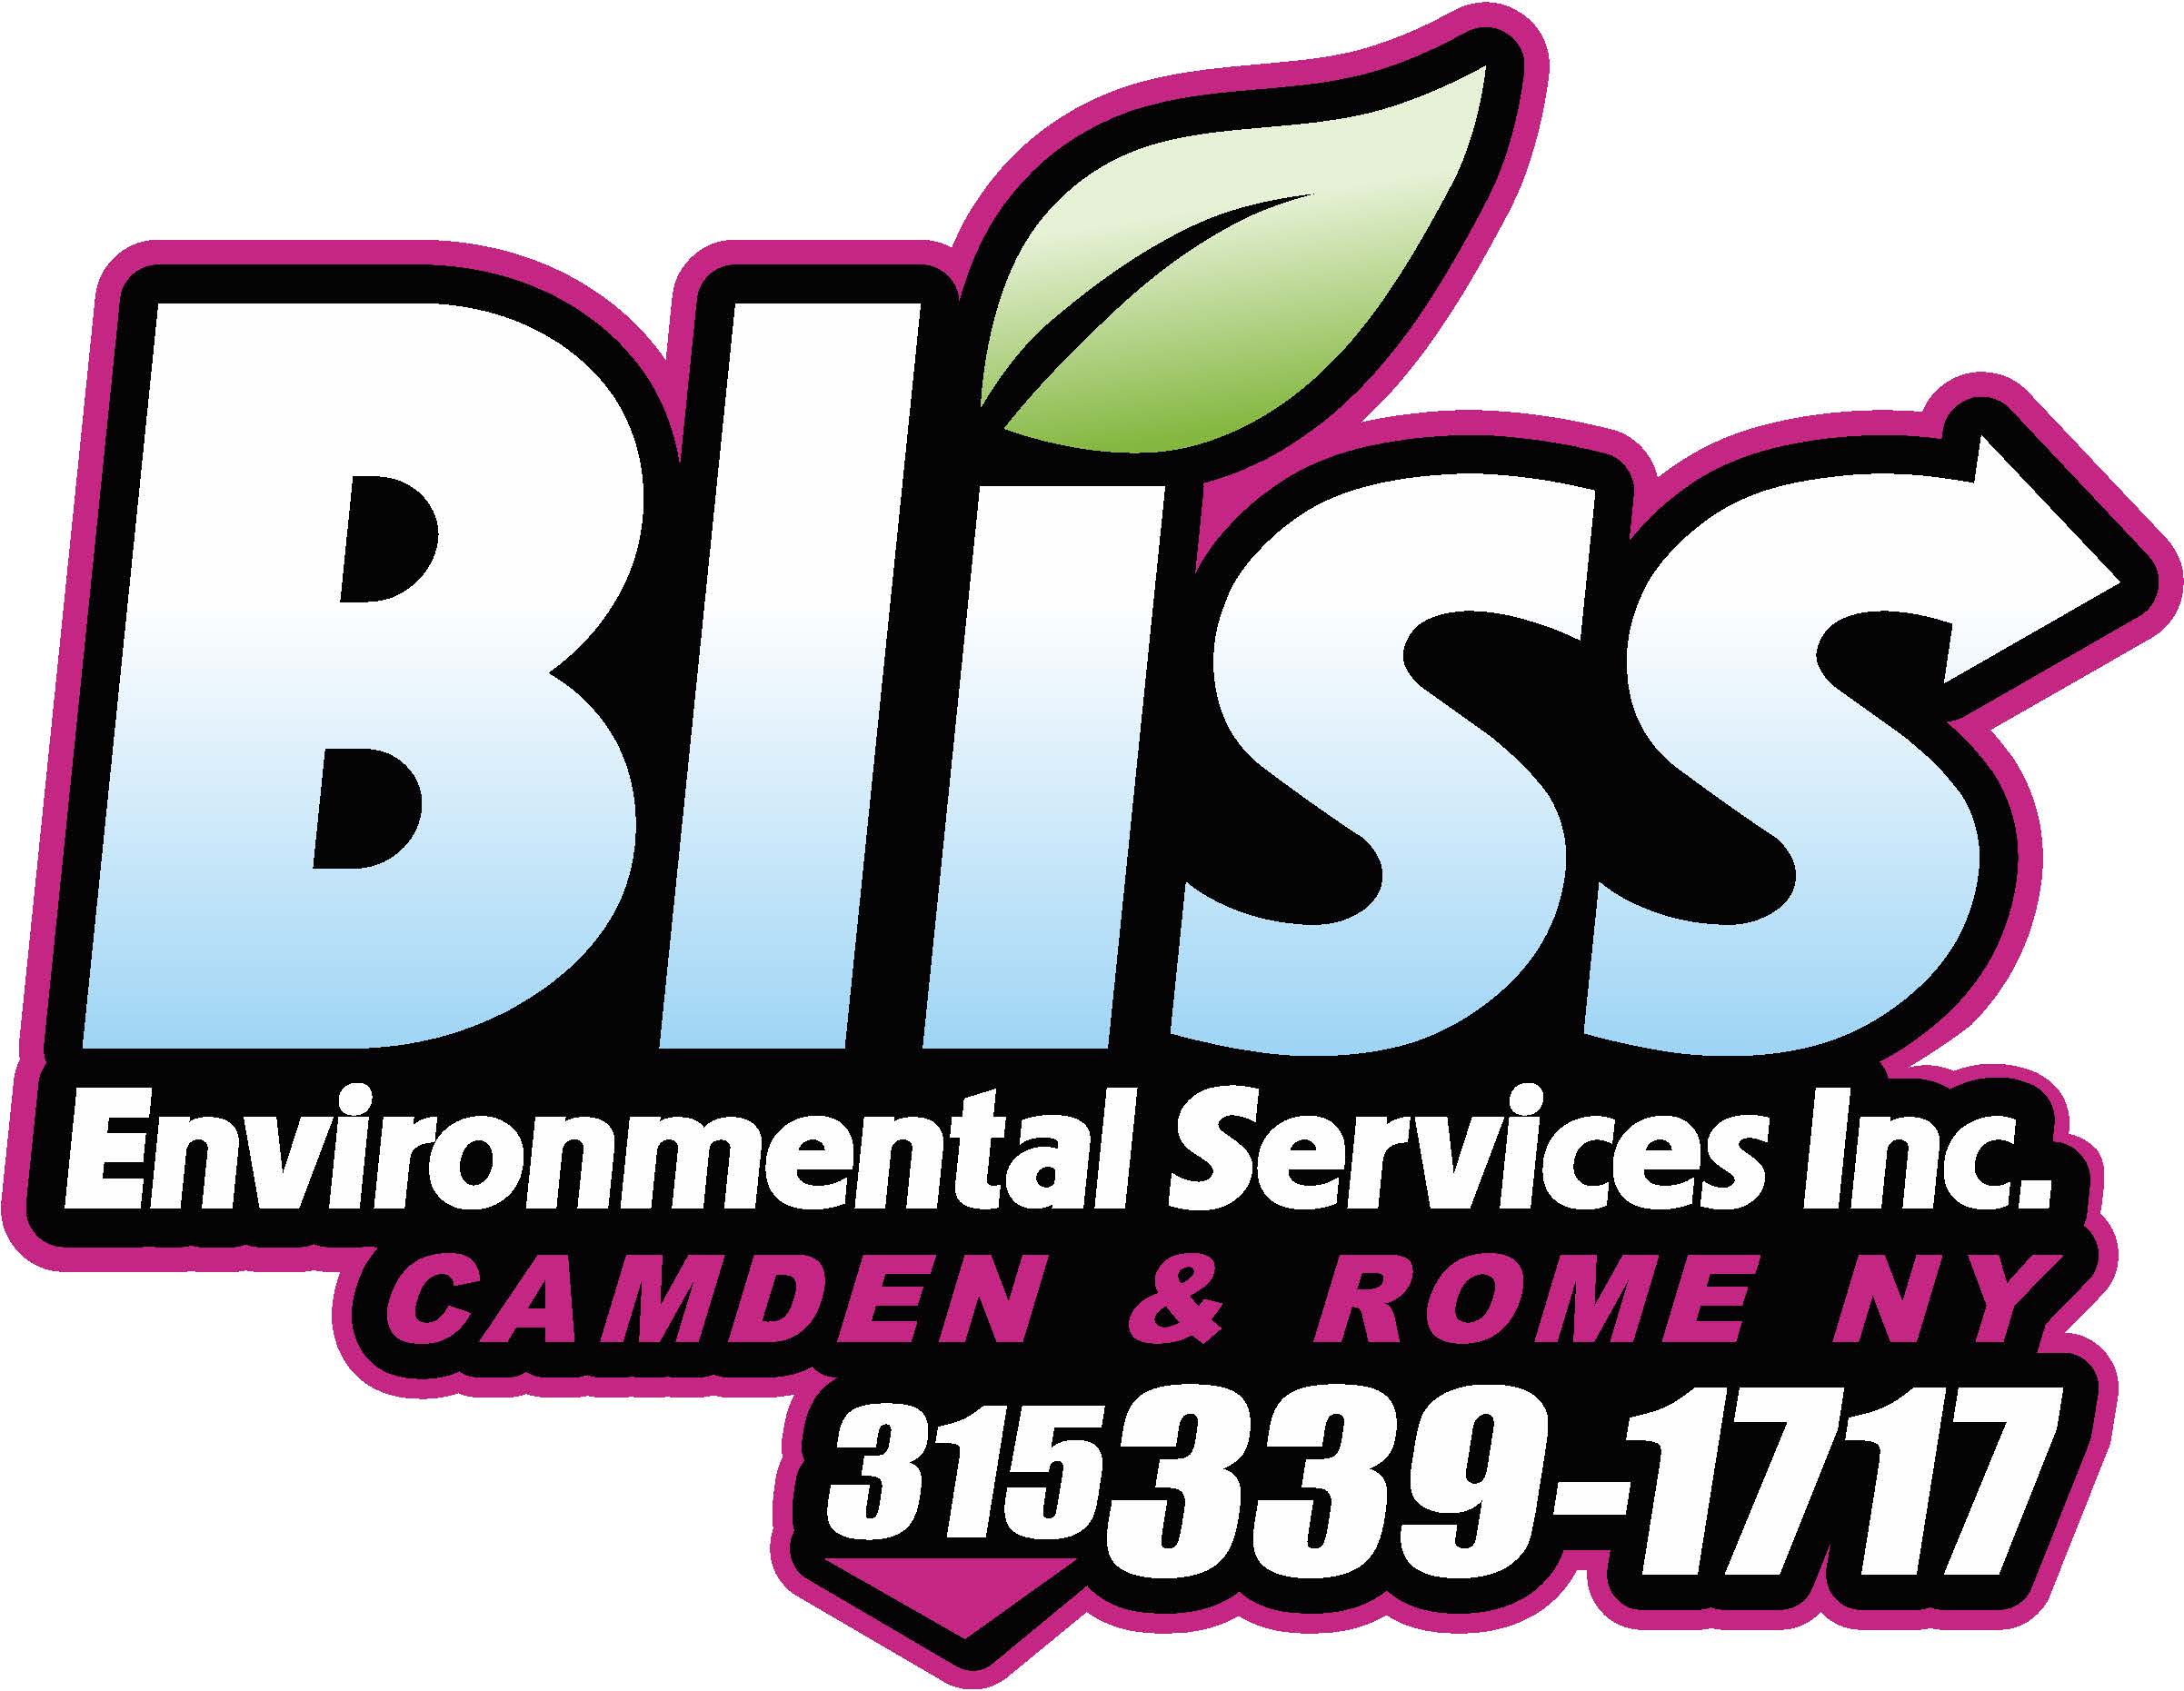 Bliss Environmental Services Inc. Logo